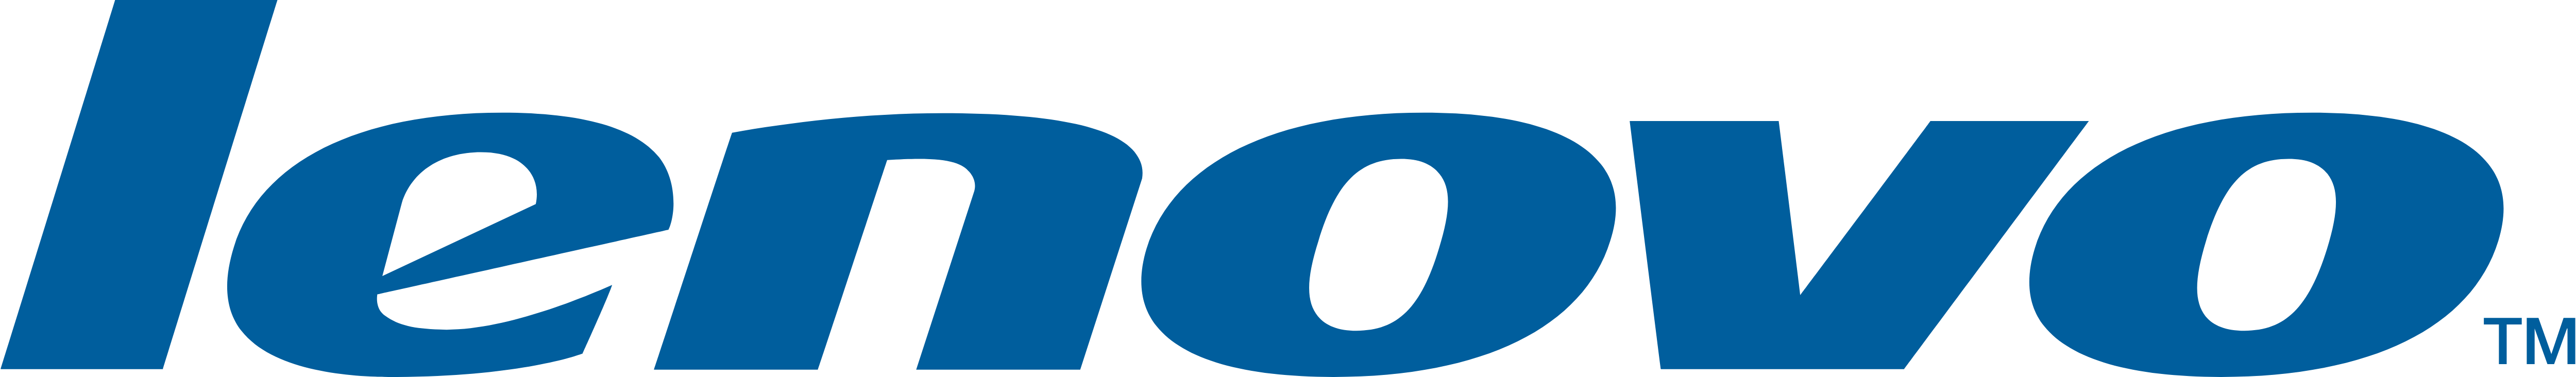 0 Result Images of Lenovo Logo Png Transparent - PNG Image Collection